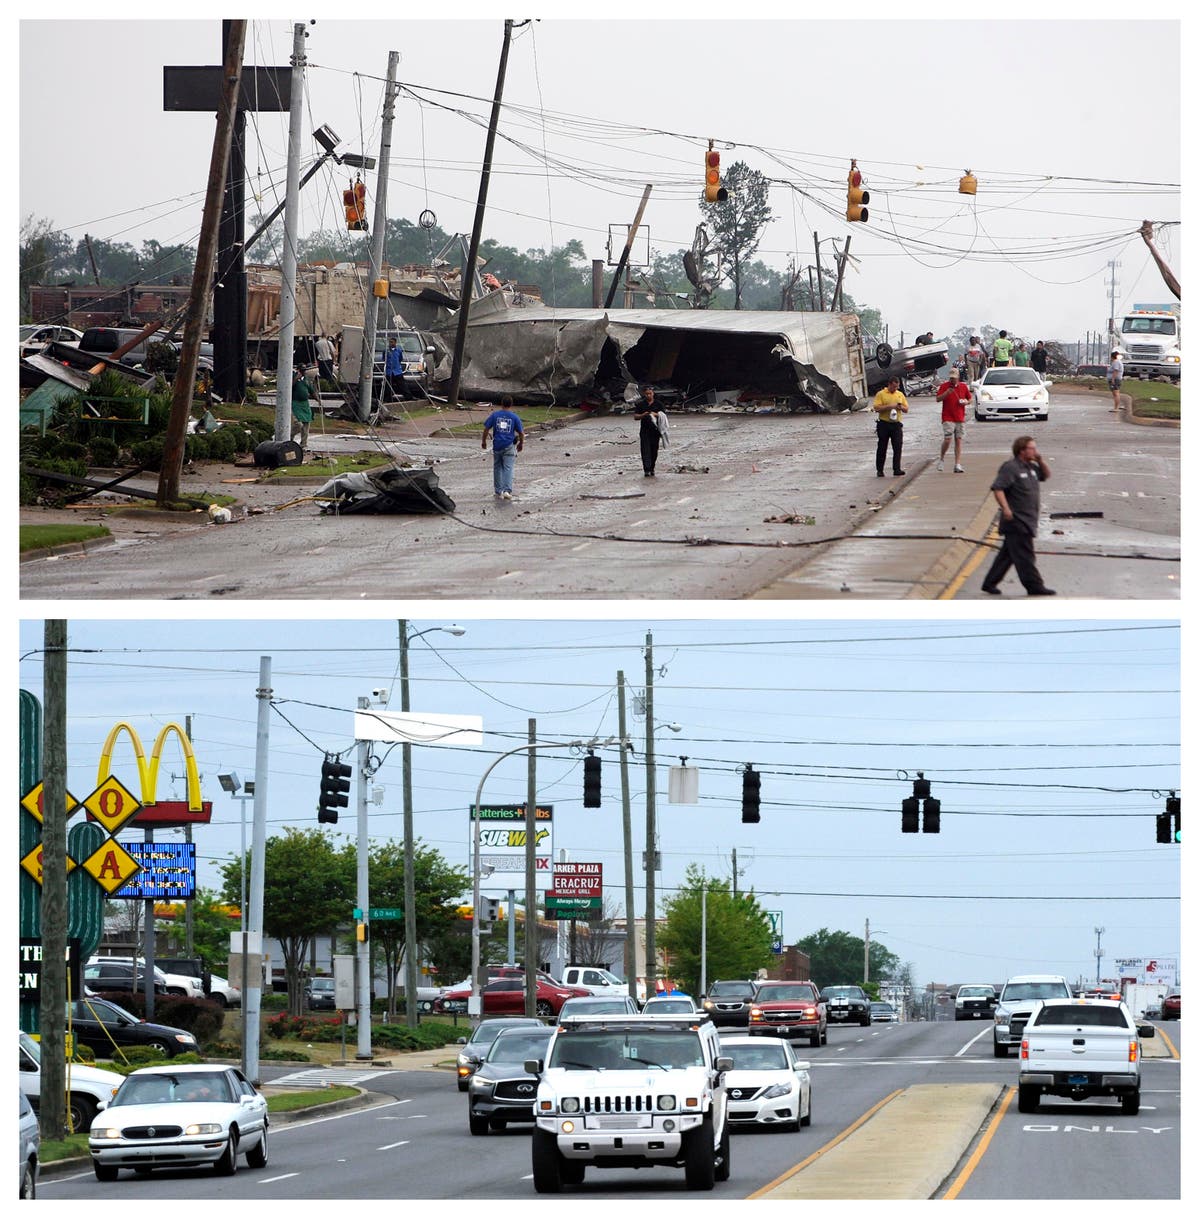 Alabama recalls 2011 tornado outbreak that killed hundreds Tornadoes National Weather Service University of Alabama Tuscaloosa Alabama